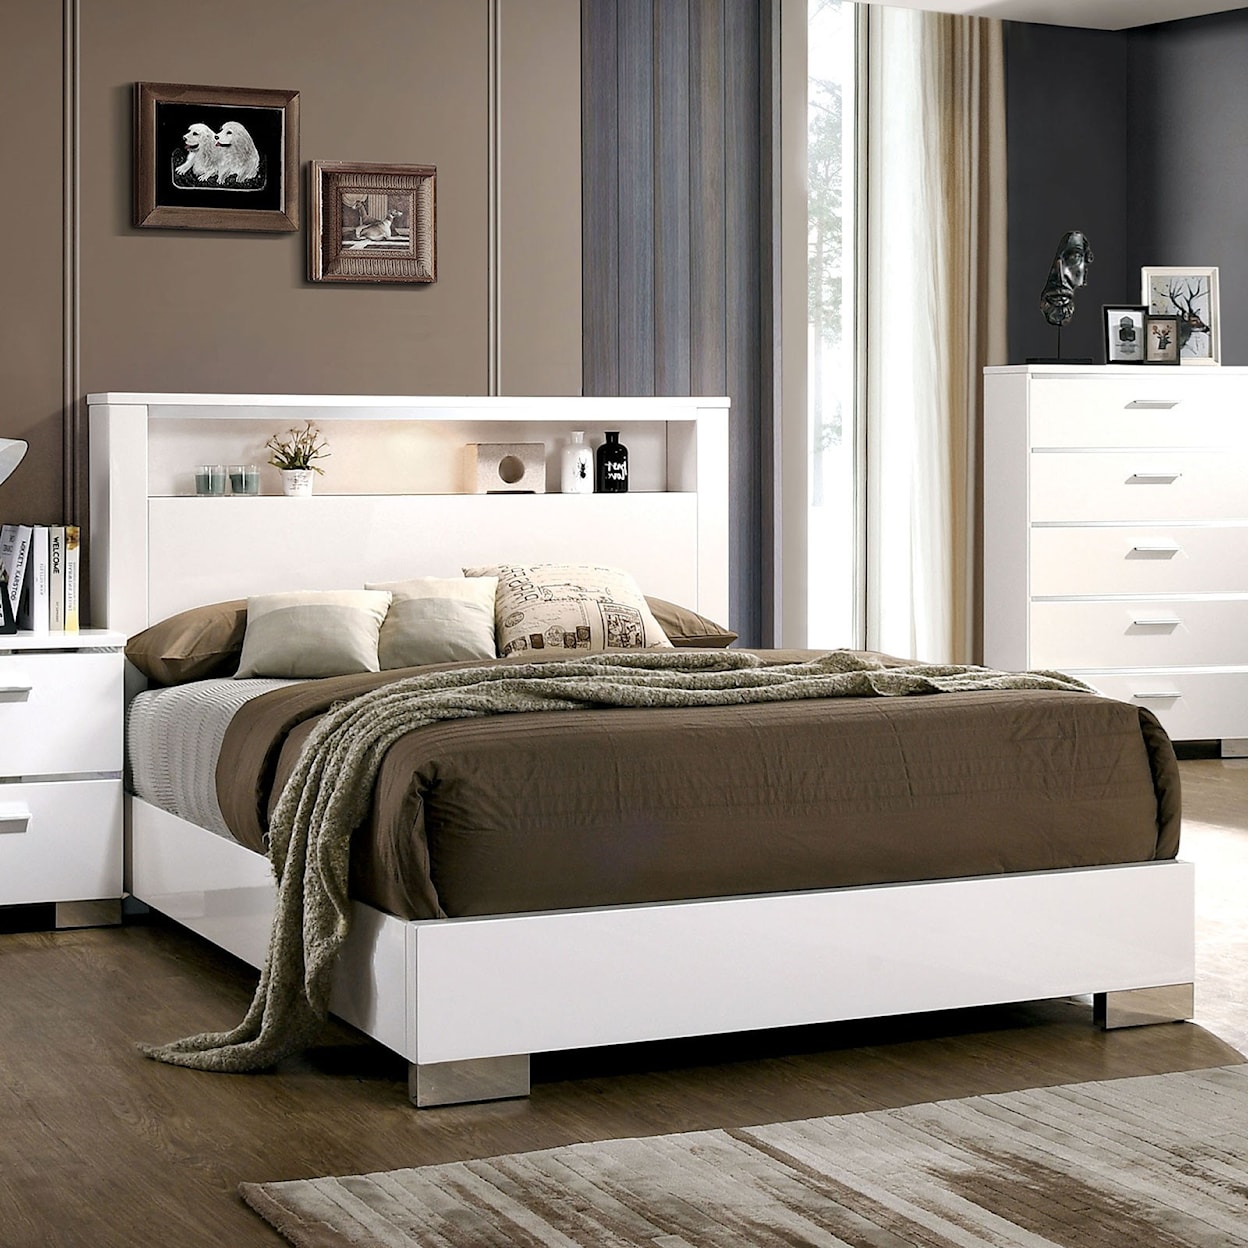 Furniture of America - FOA Malte Queen Panel Bed